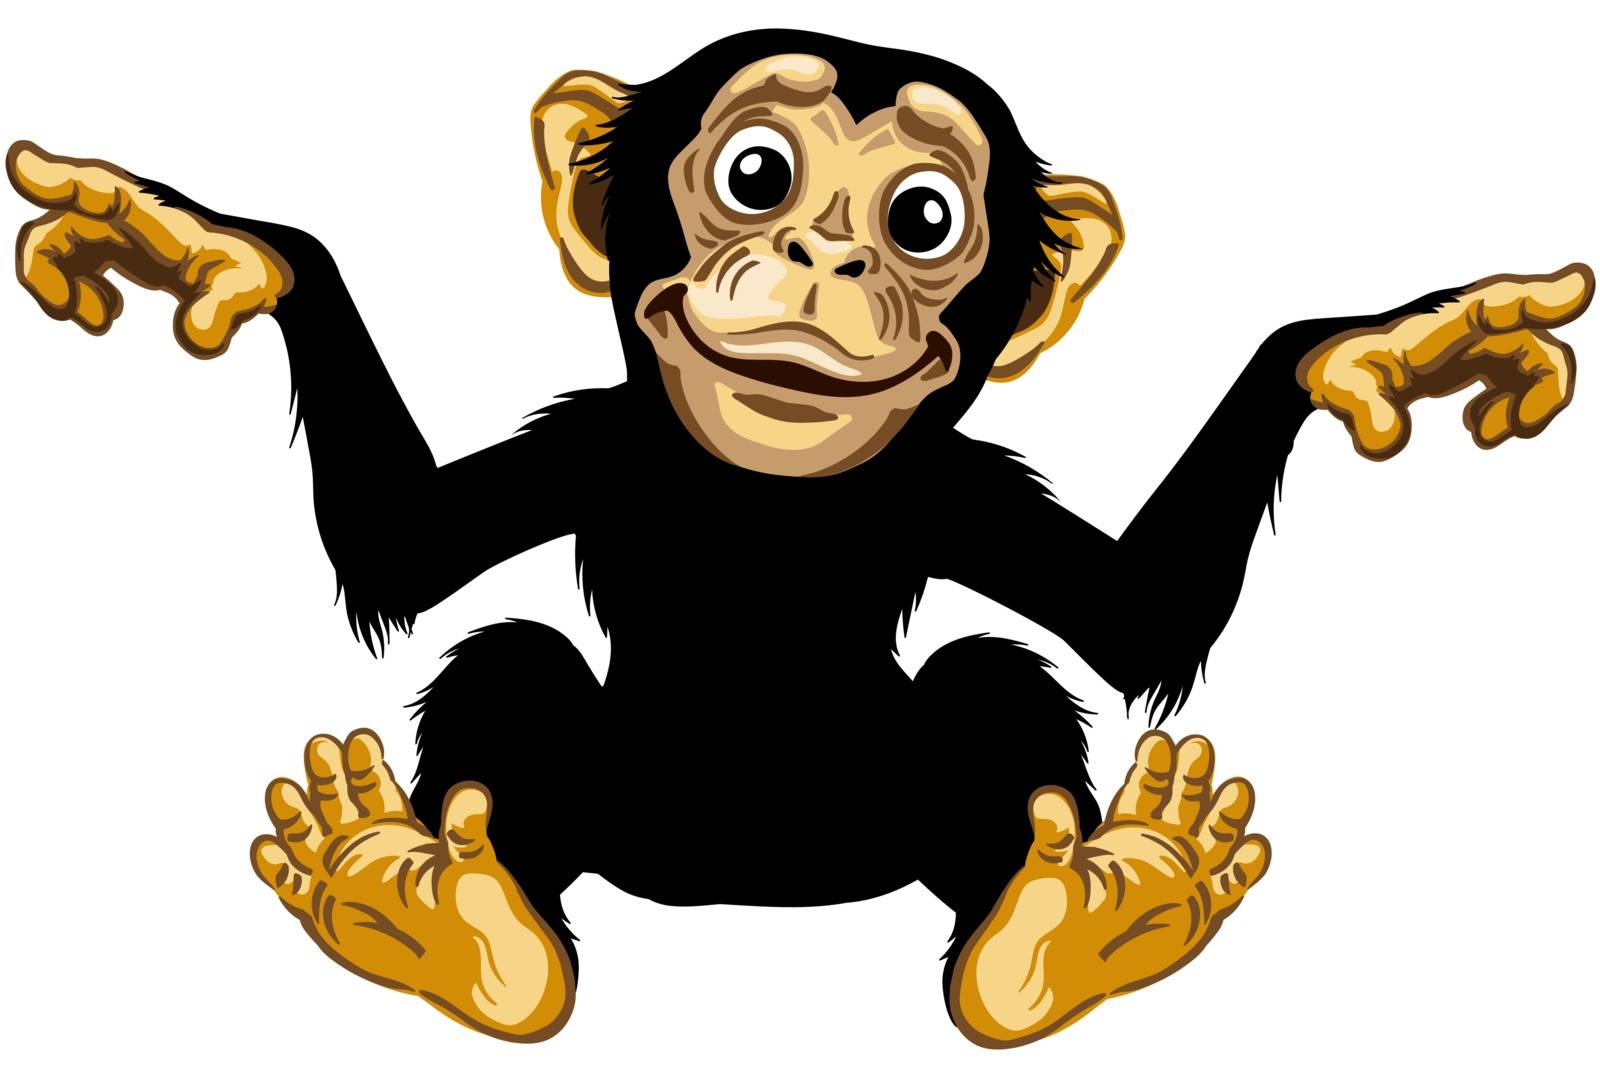 smiling cartoon chimpanzee by insima